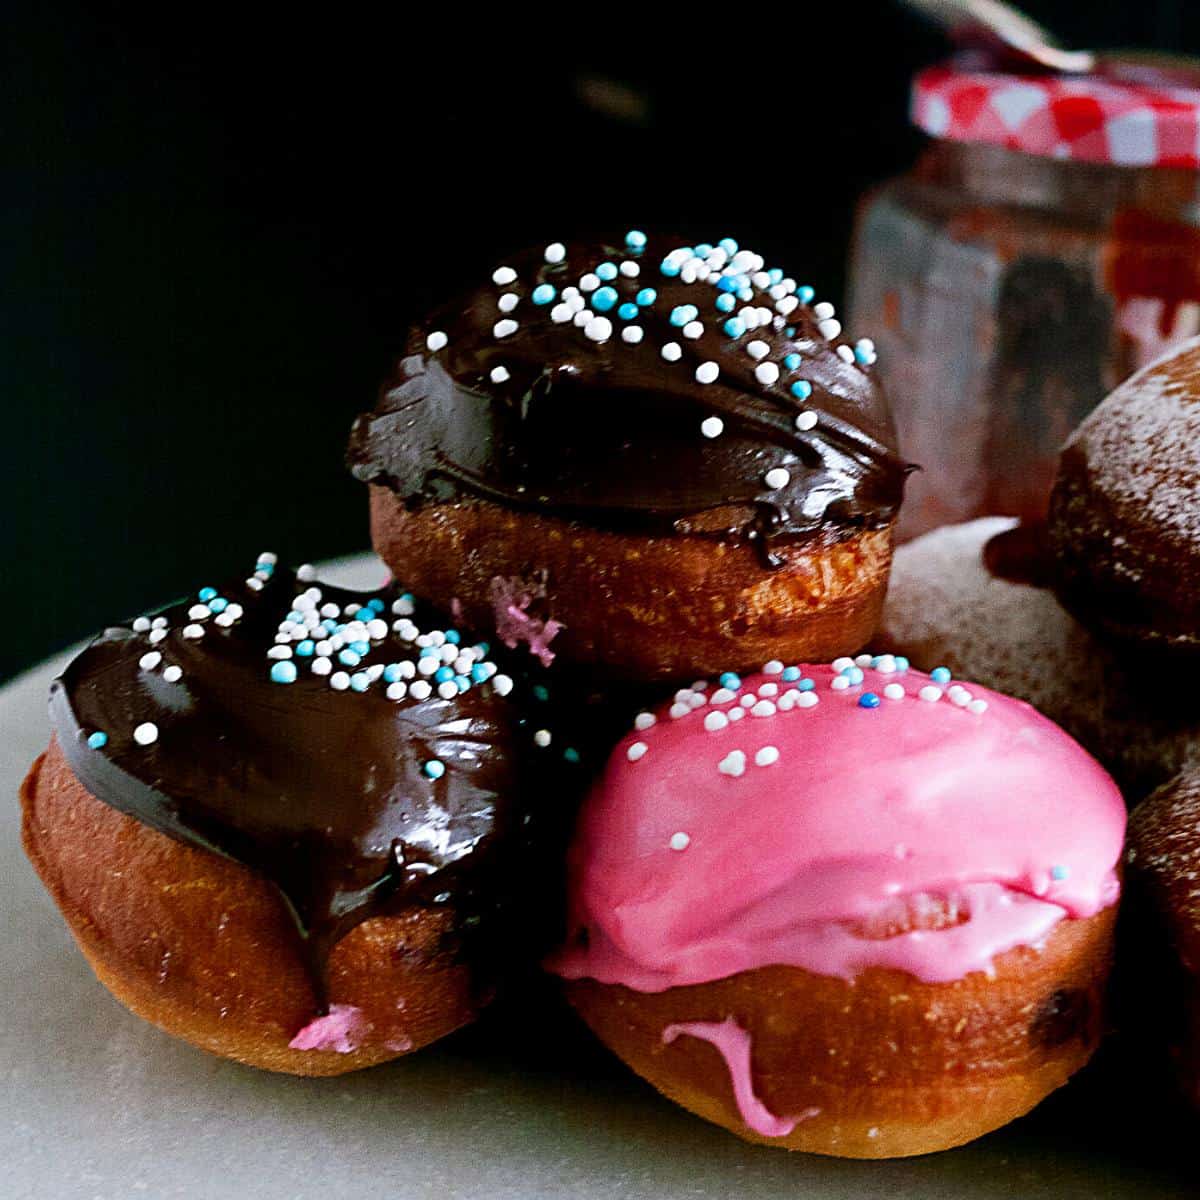 Chocolate sufganiyot doughnuts on the table.